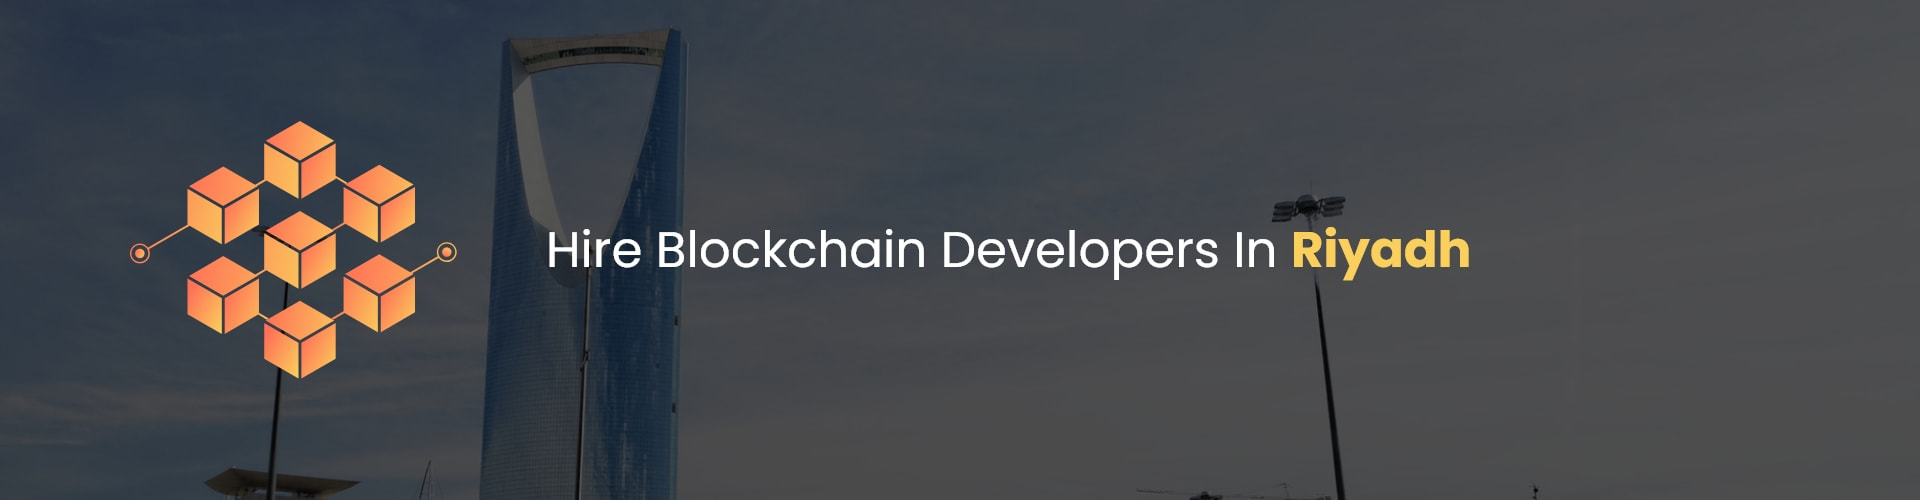 hire blockchain developers in riyadh